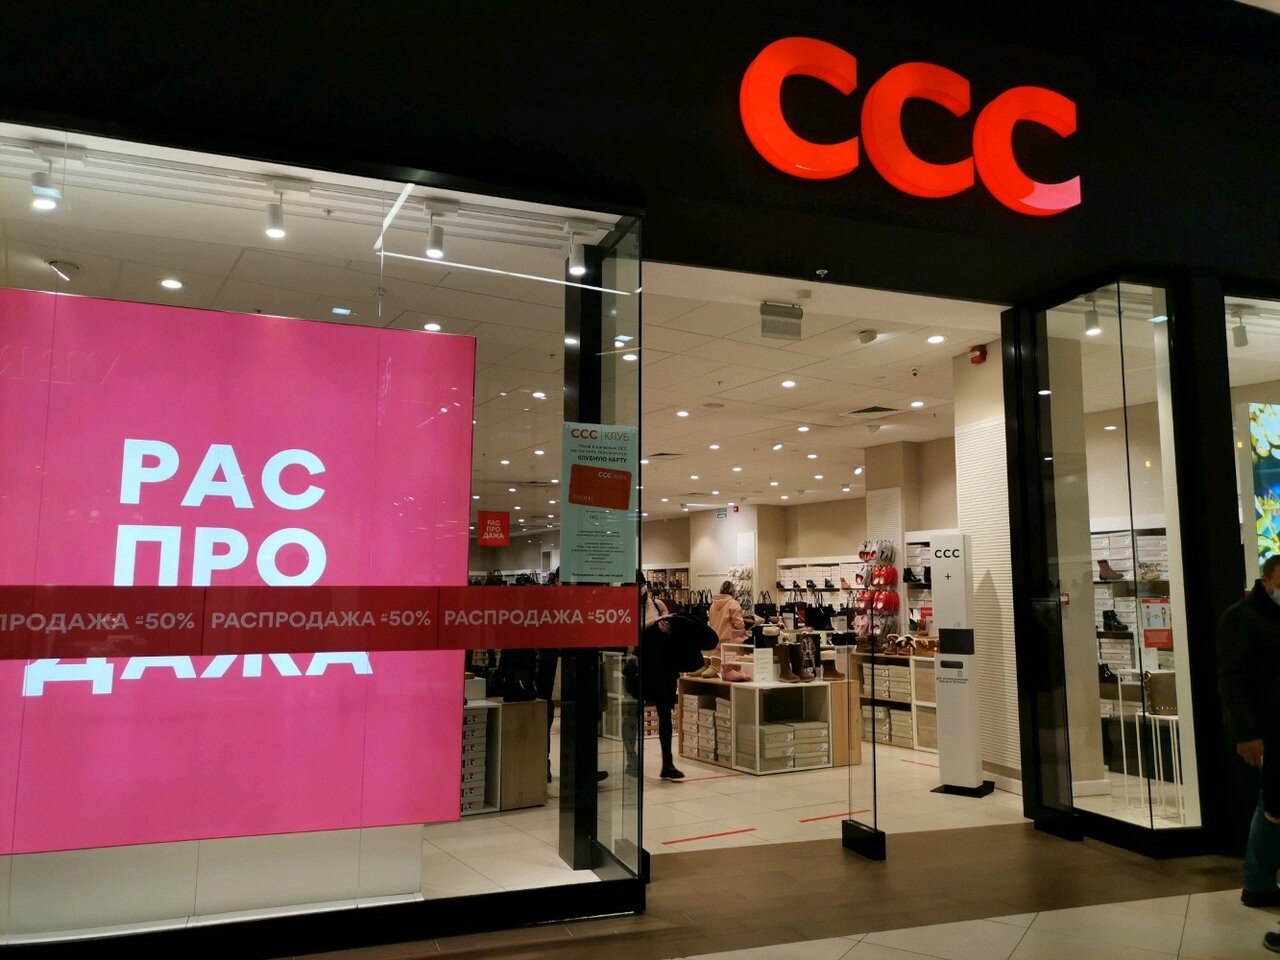 Ccc обувь. Магазин CCC. Магазин ССС. Обувной магазин ССС. CCC Store магазин.